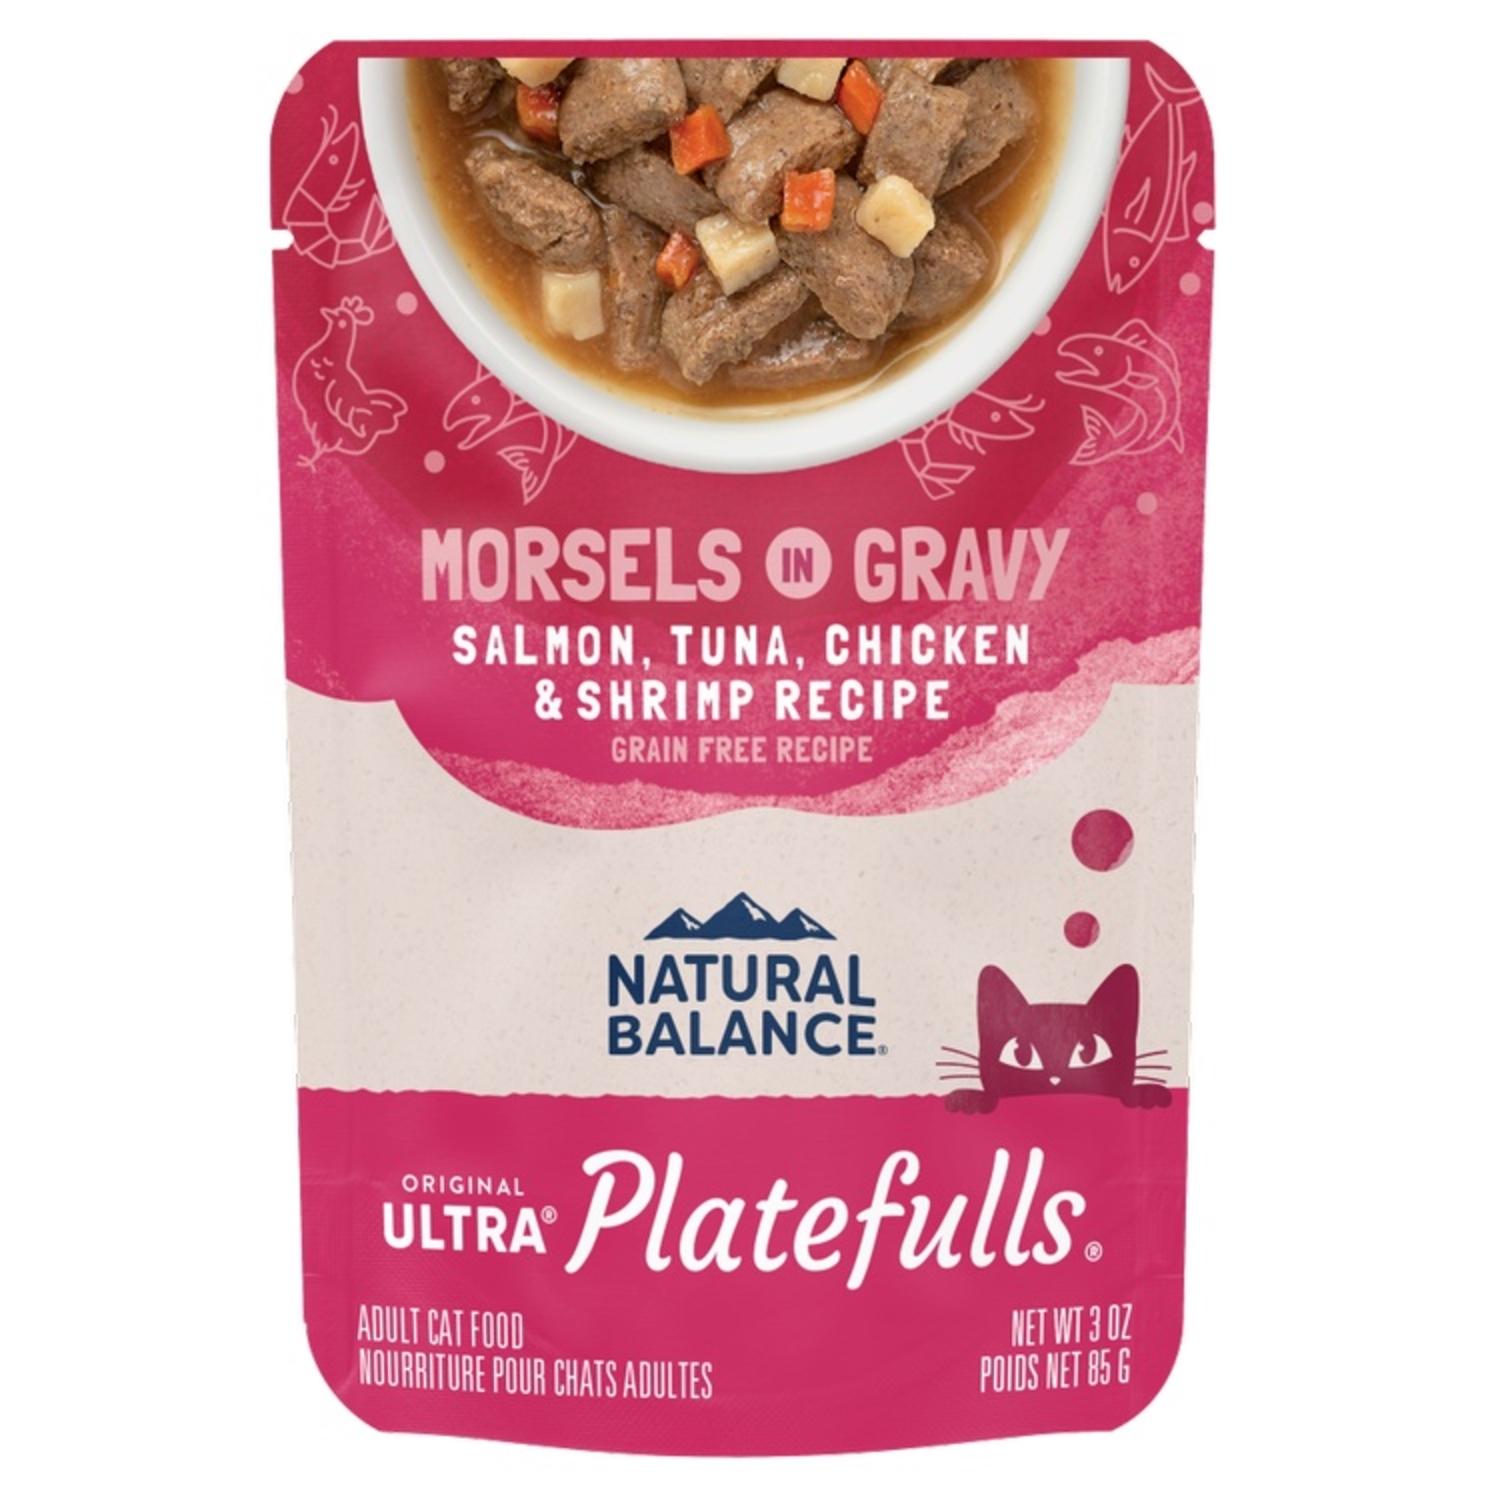 Natural Balance Platefulls® Salmon, Tuna, Chicken & Shrimp Recipe Morsels in Gravy